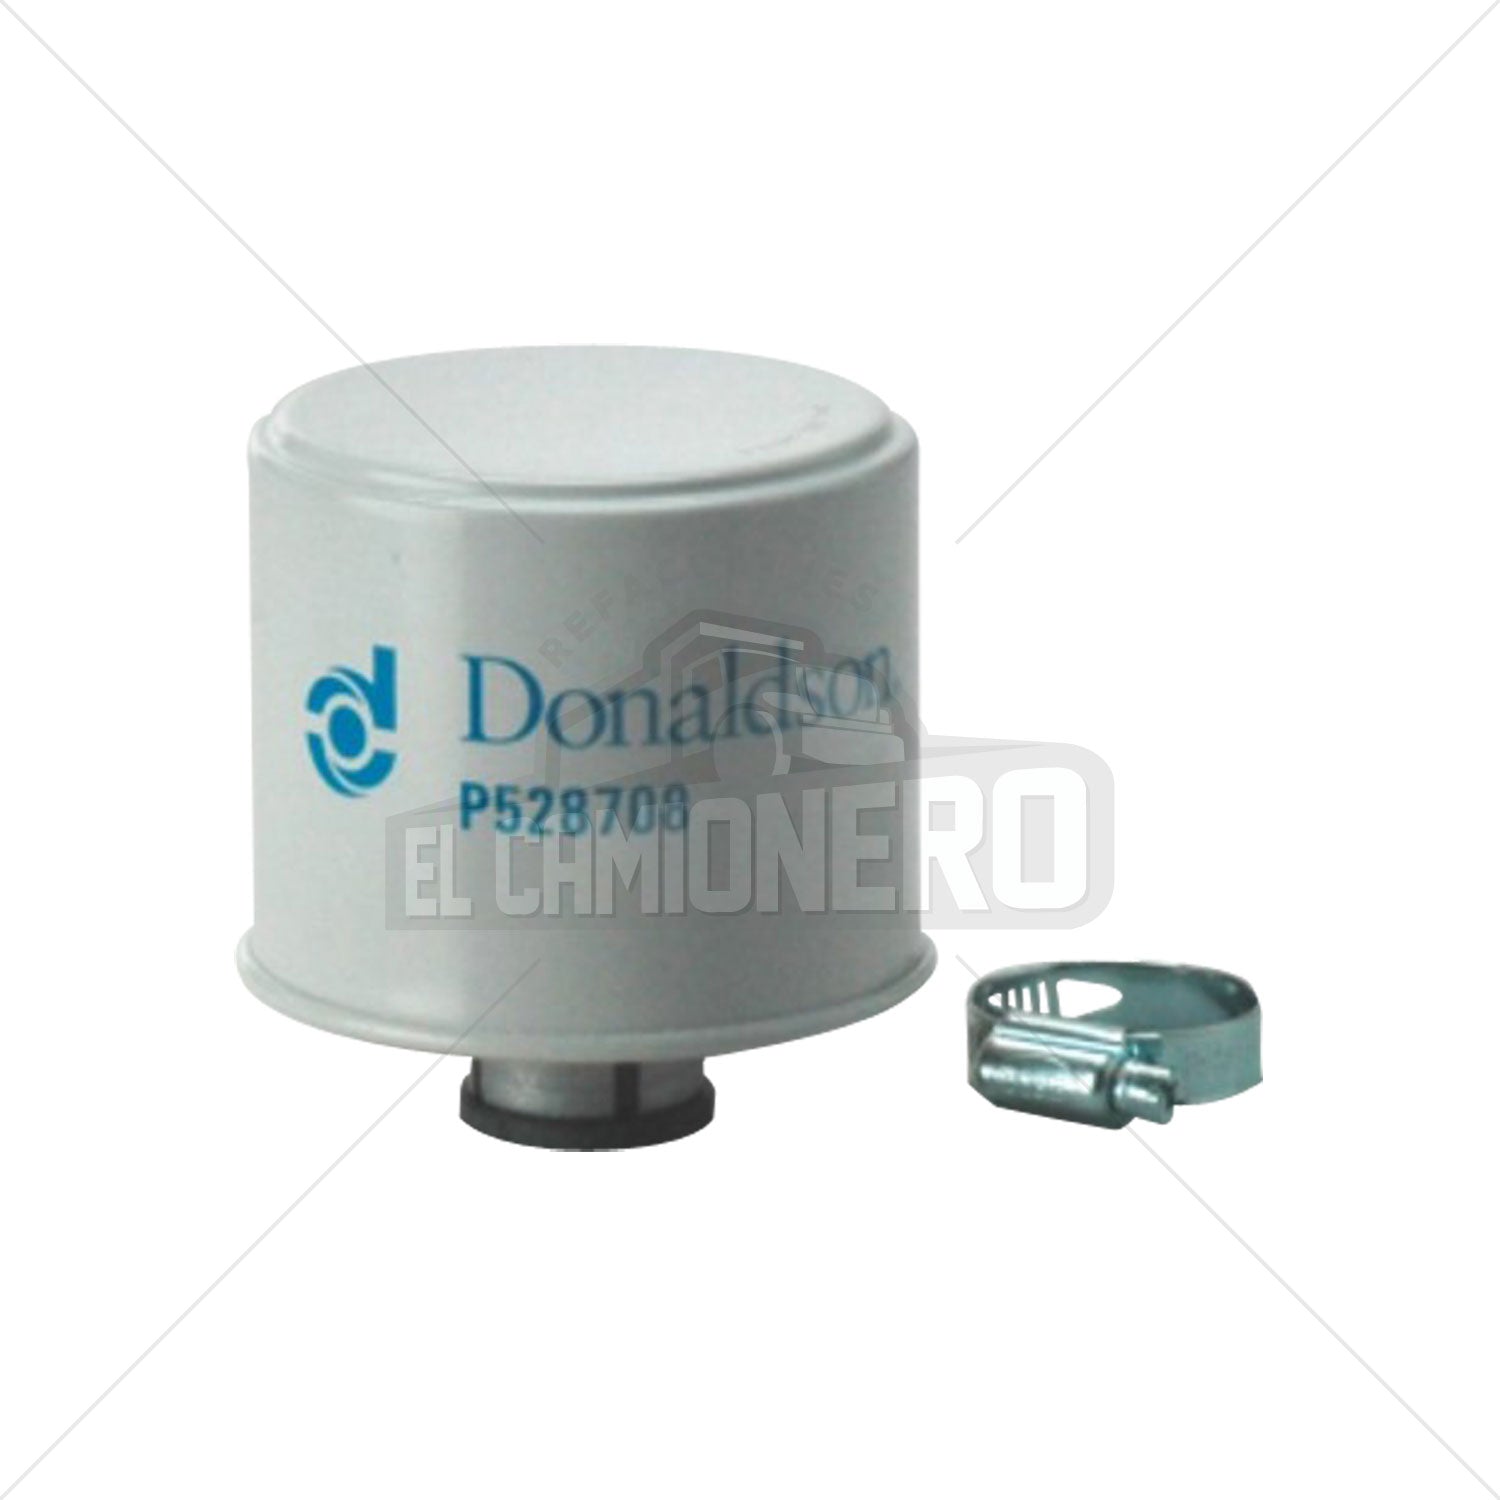 Respiradero de aire Donaldson P528708